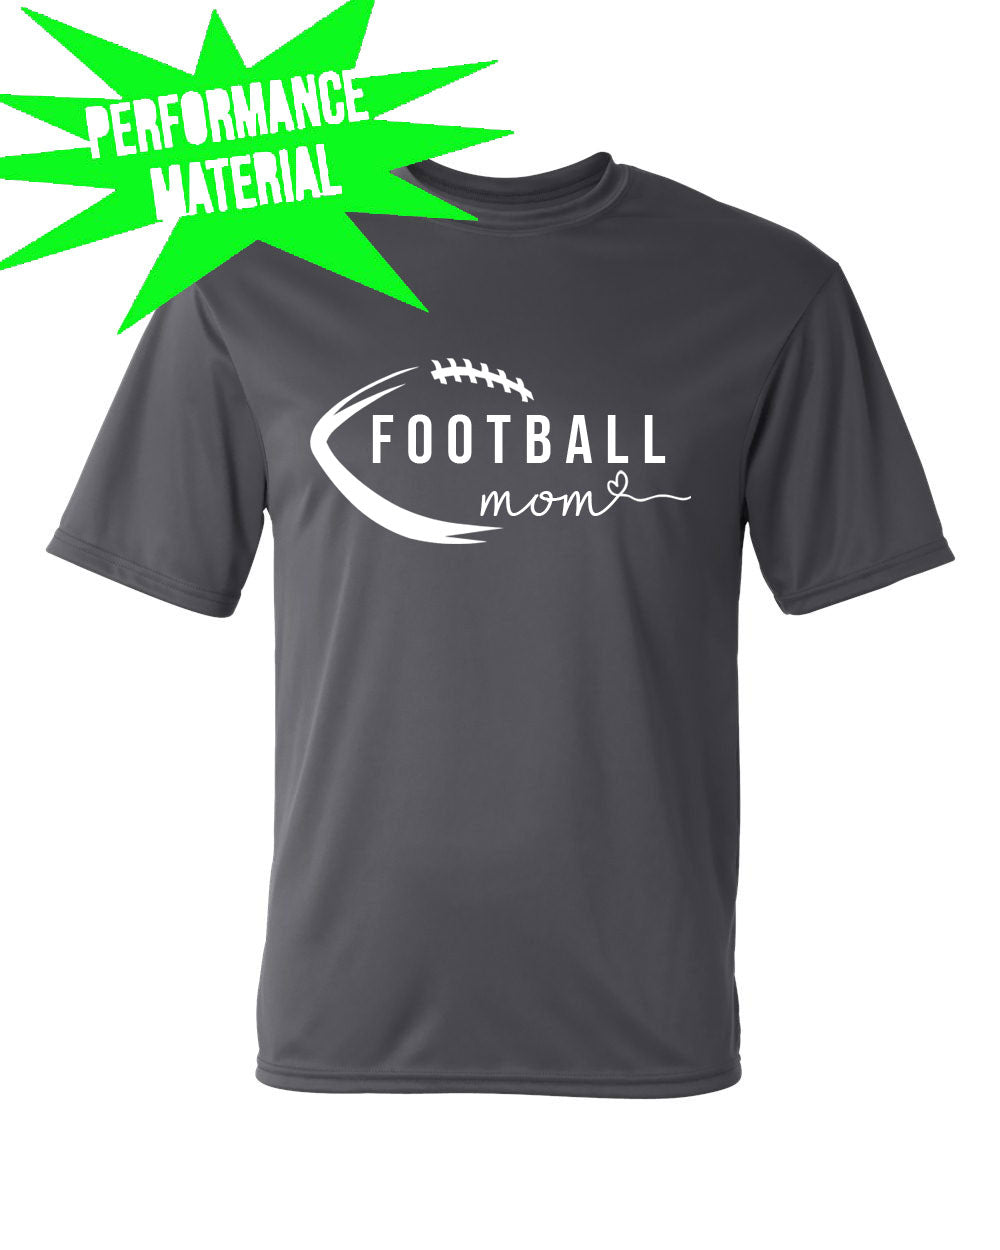 High Point Football Performance Material design 5 T-Shirt